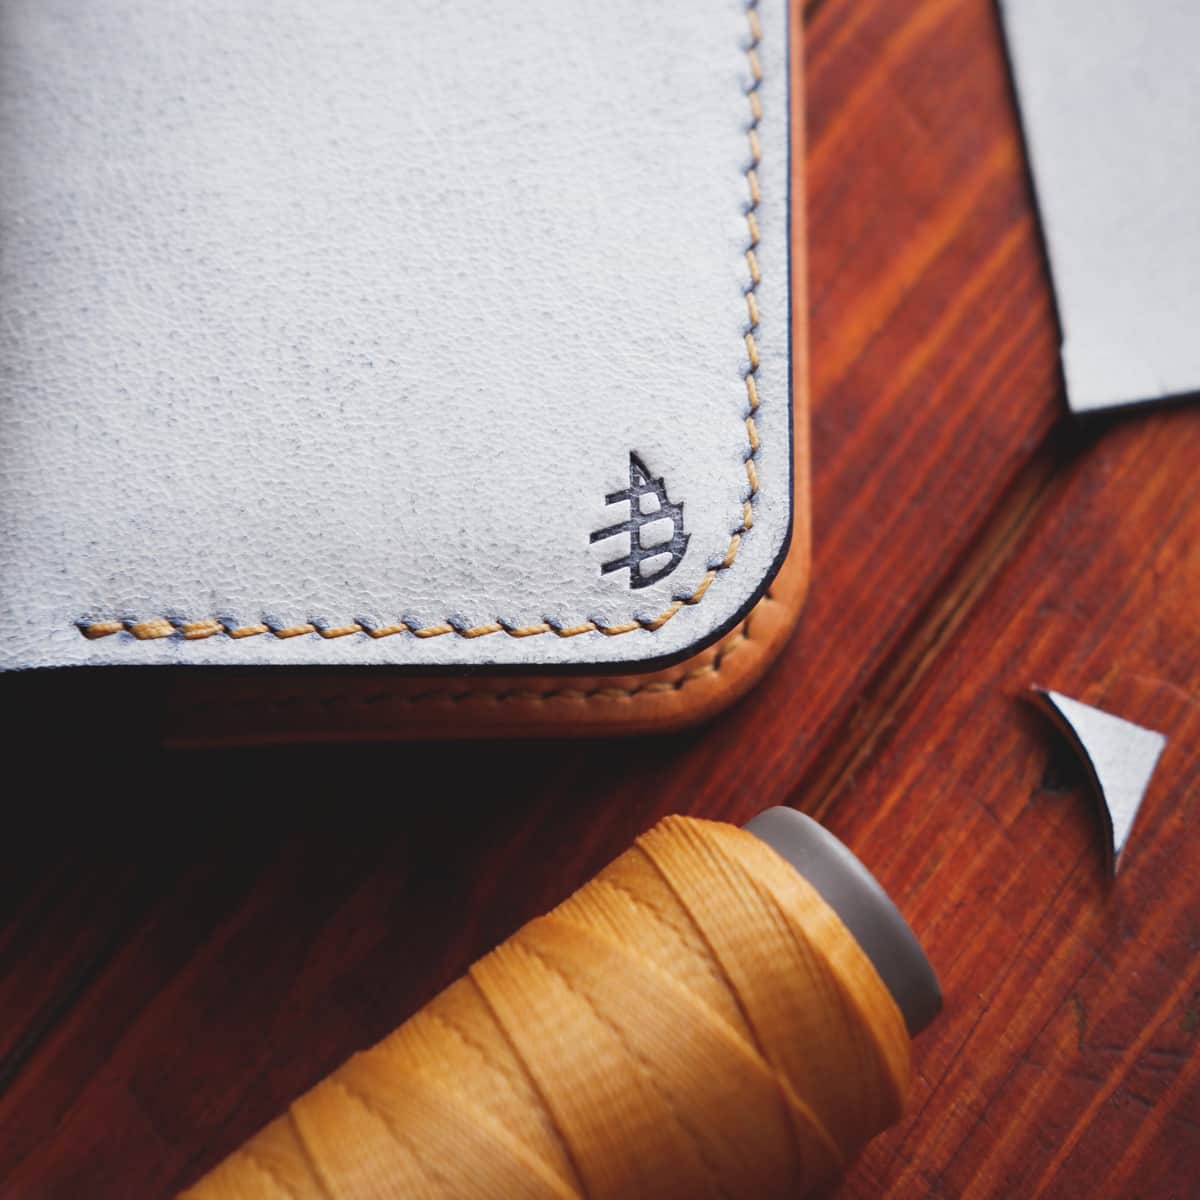 Closeup of the Damn Pine Leather Goods maker's mark